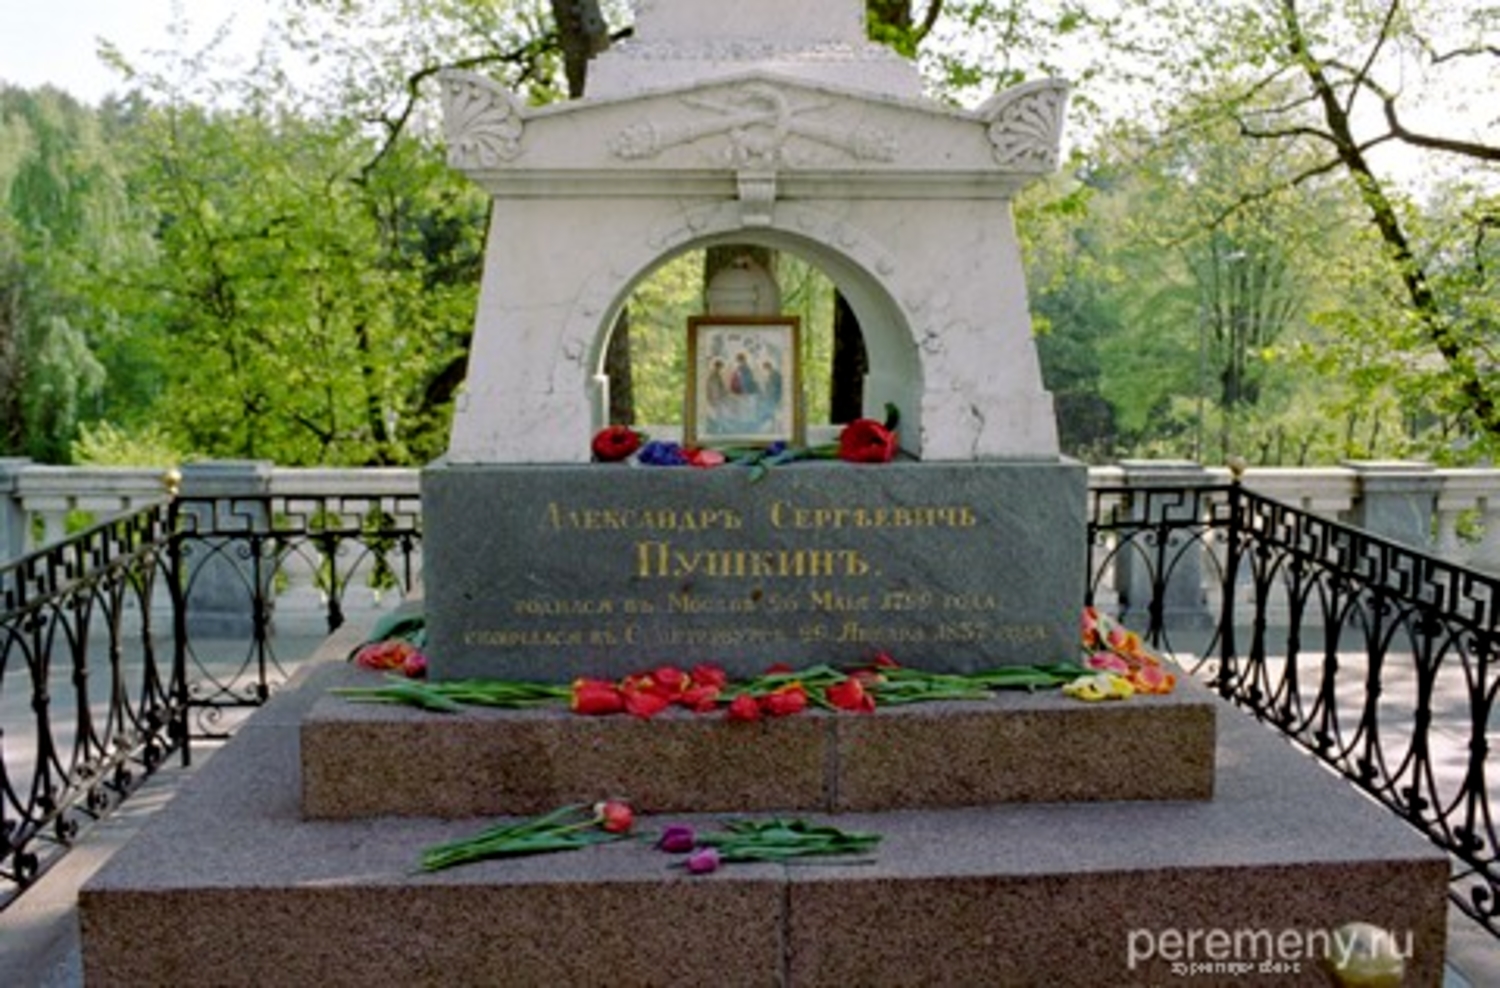 Где похоронен пушкин александр сергеевич в каком городе на каком кладбище фото